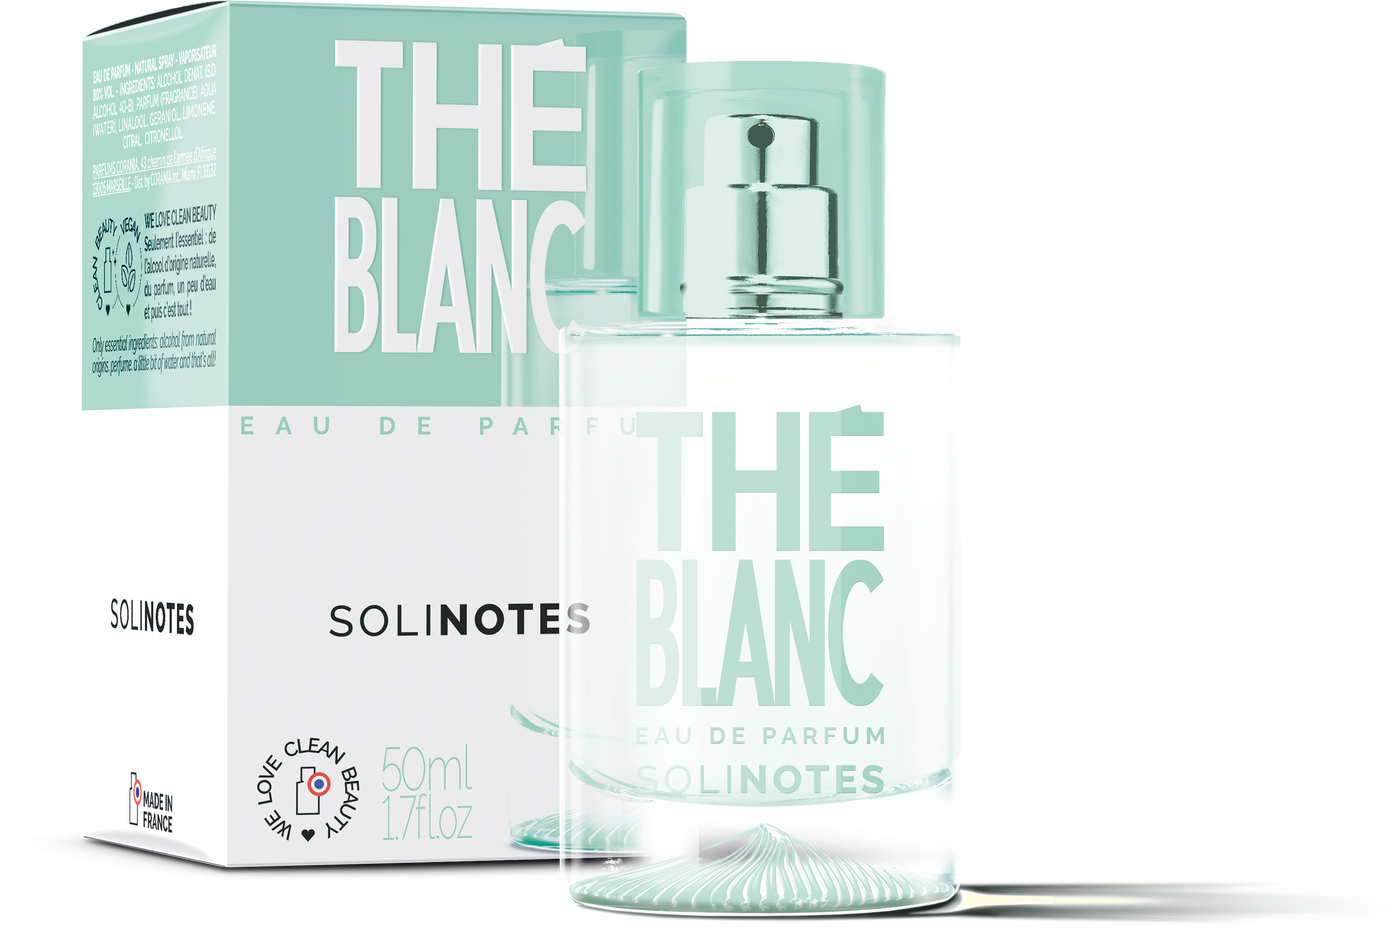 Solinotes (US Stores) - Distributed by Scents of Europe White Tea Eau de Parfum 1.7 oz - CLEAN BEAUTY - Simple Good